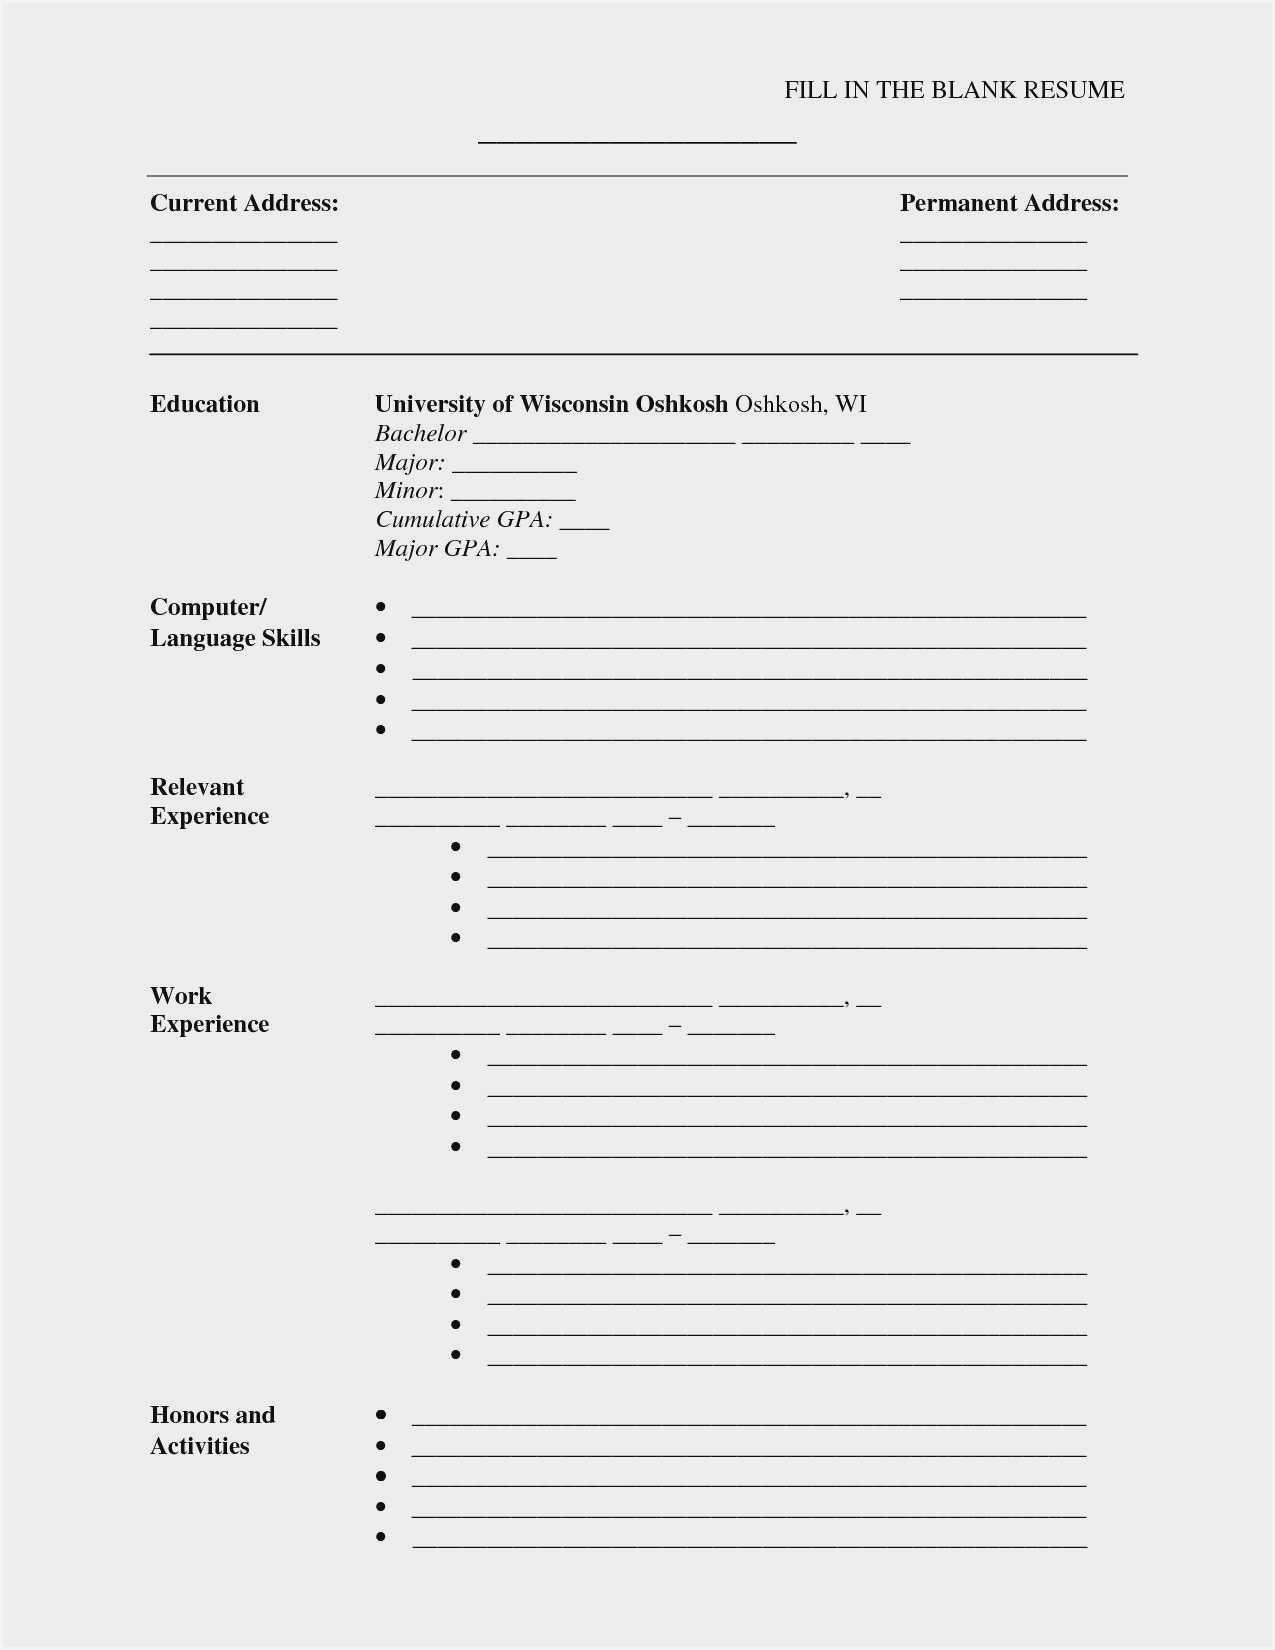 Blank Cv Format Word Download - Resume : Resume Sample #3945 Intended For Free Blank Cv Template Download